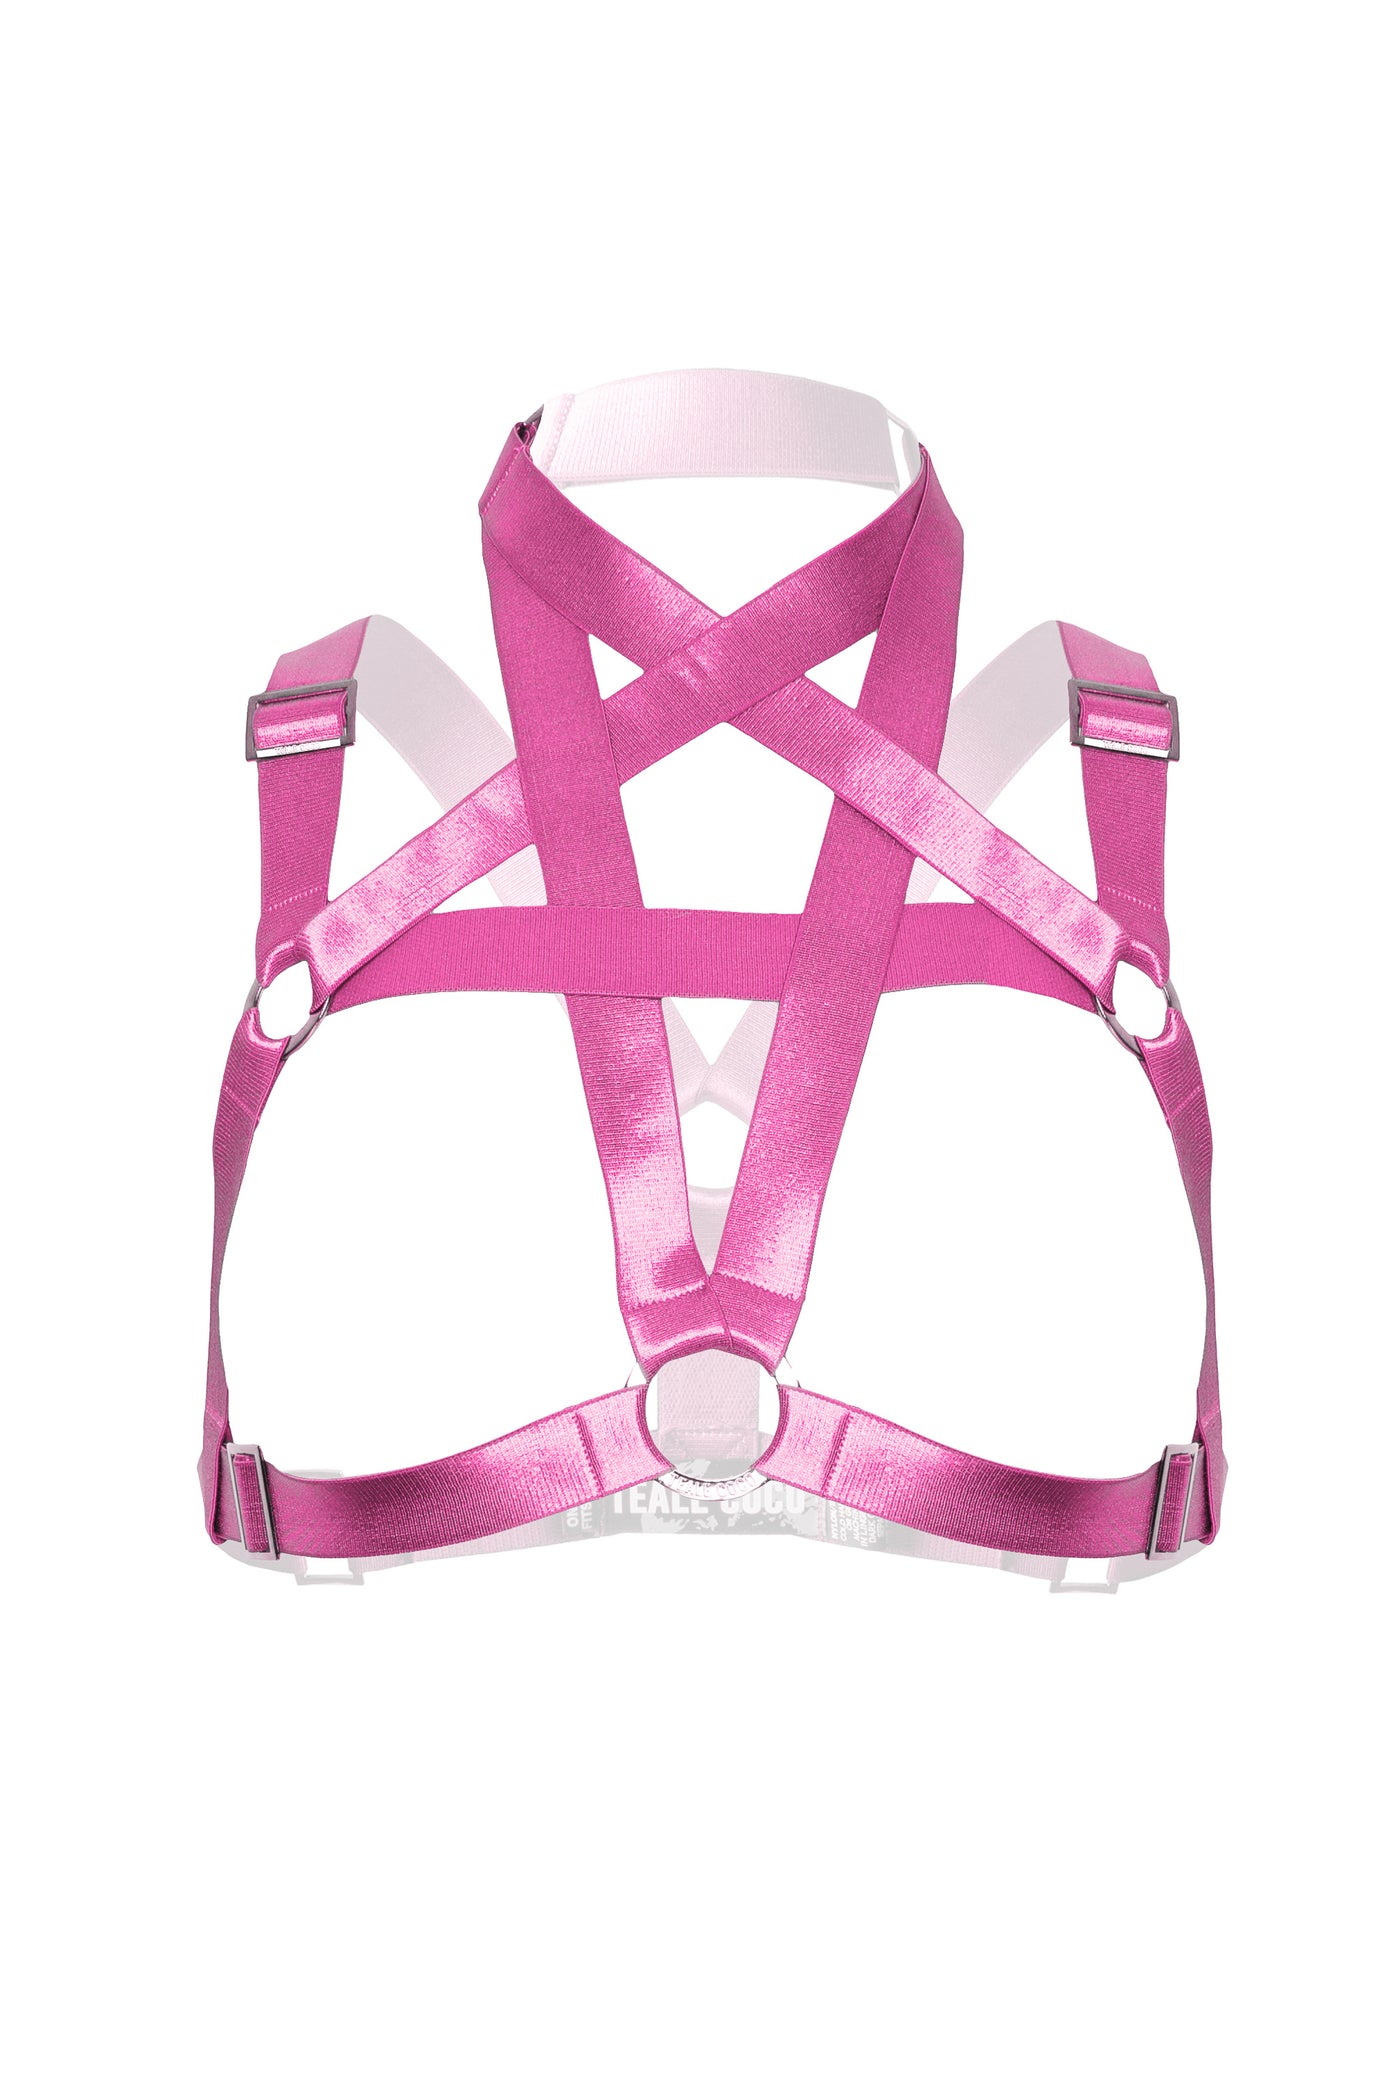 Pentagram Bust Harness - Candy Pink